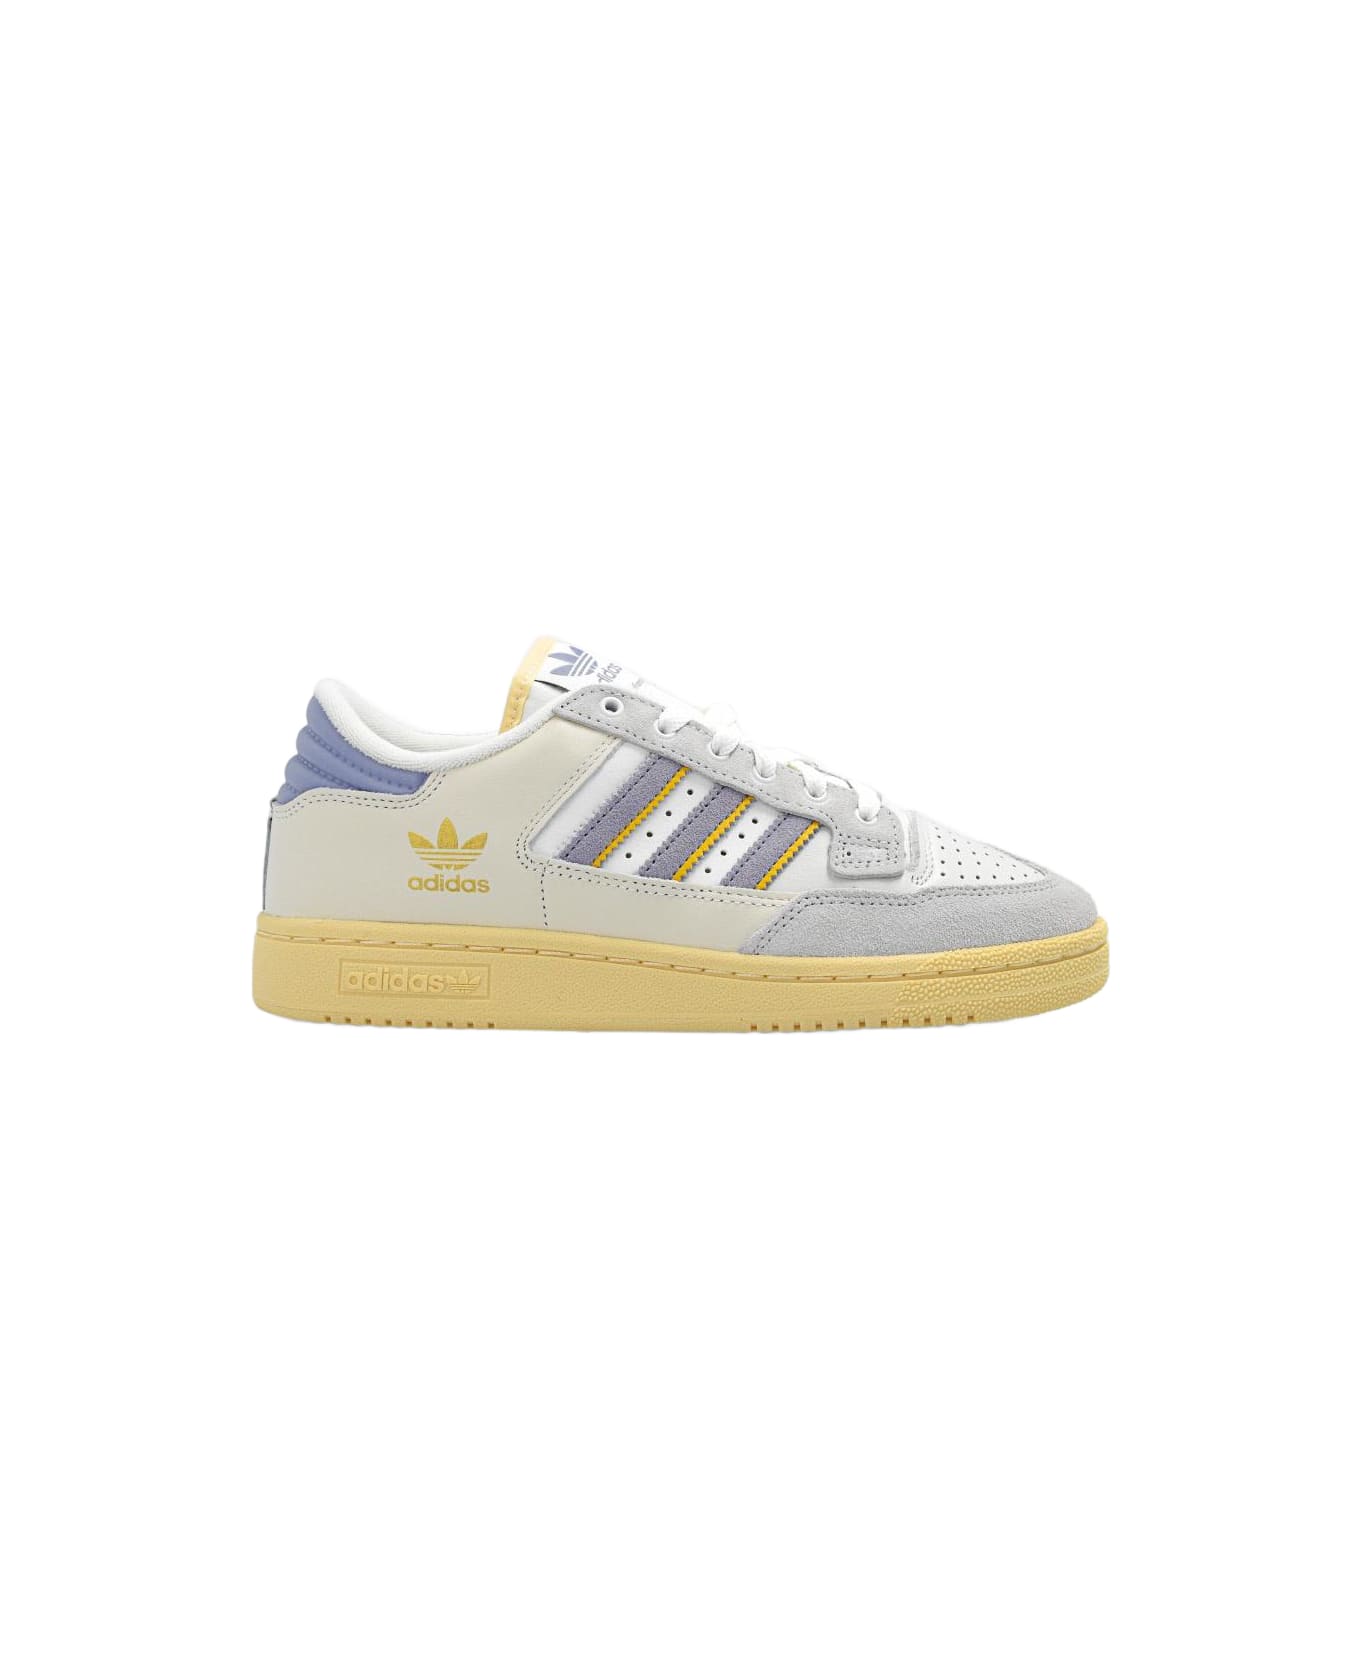 Adidas Originals 'centennial 85' Sneakers - White